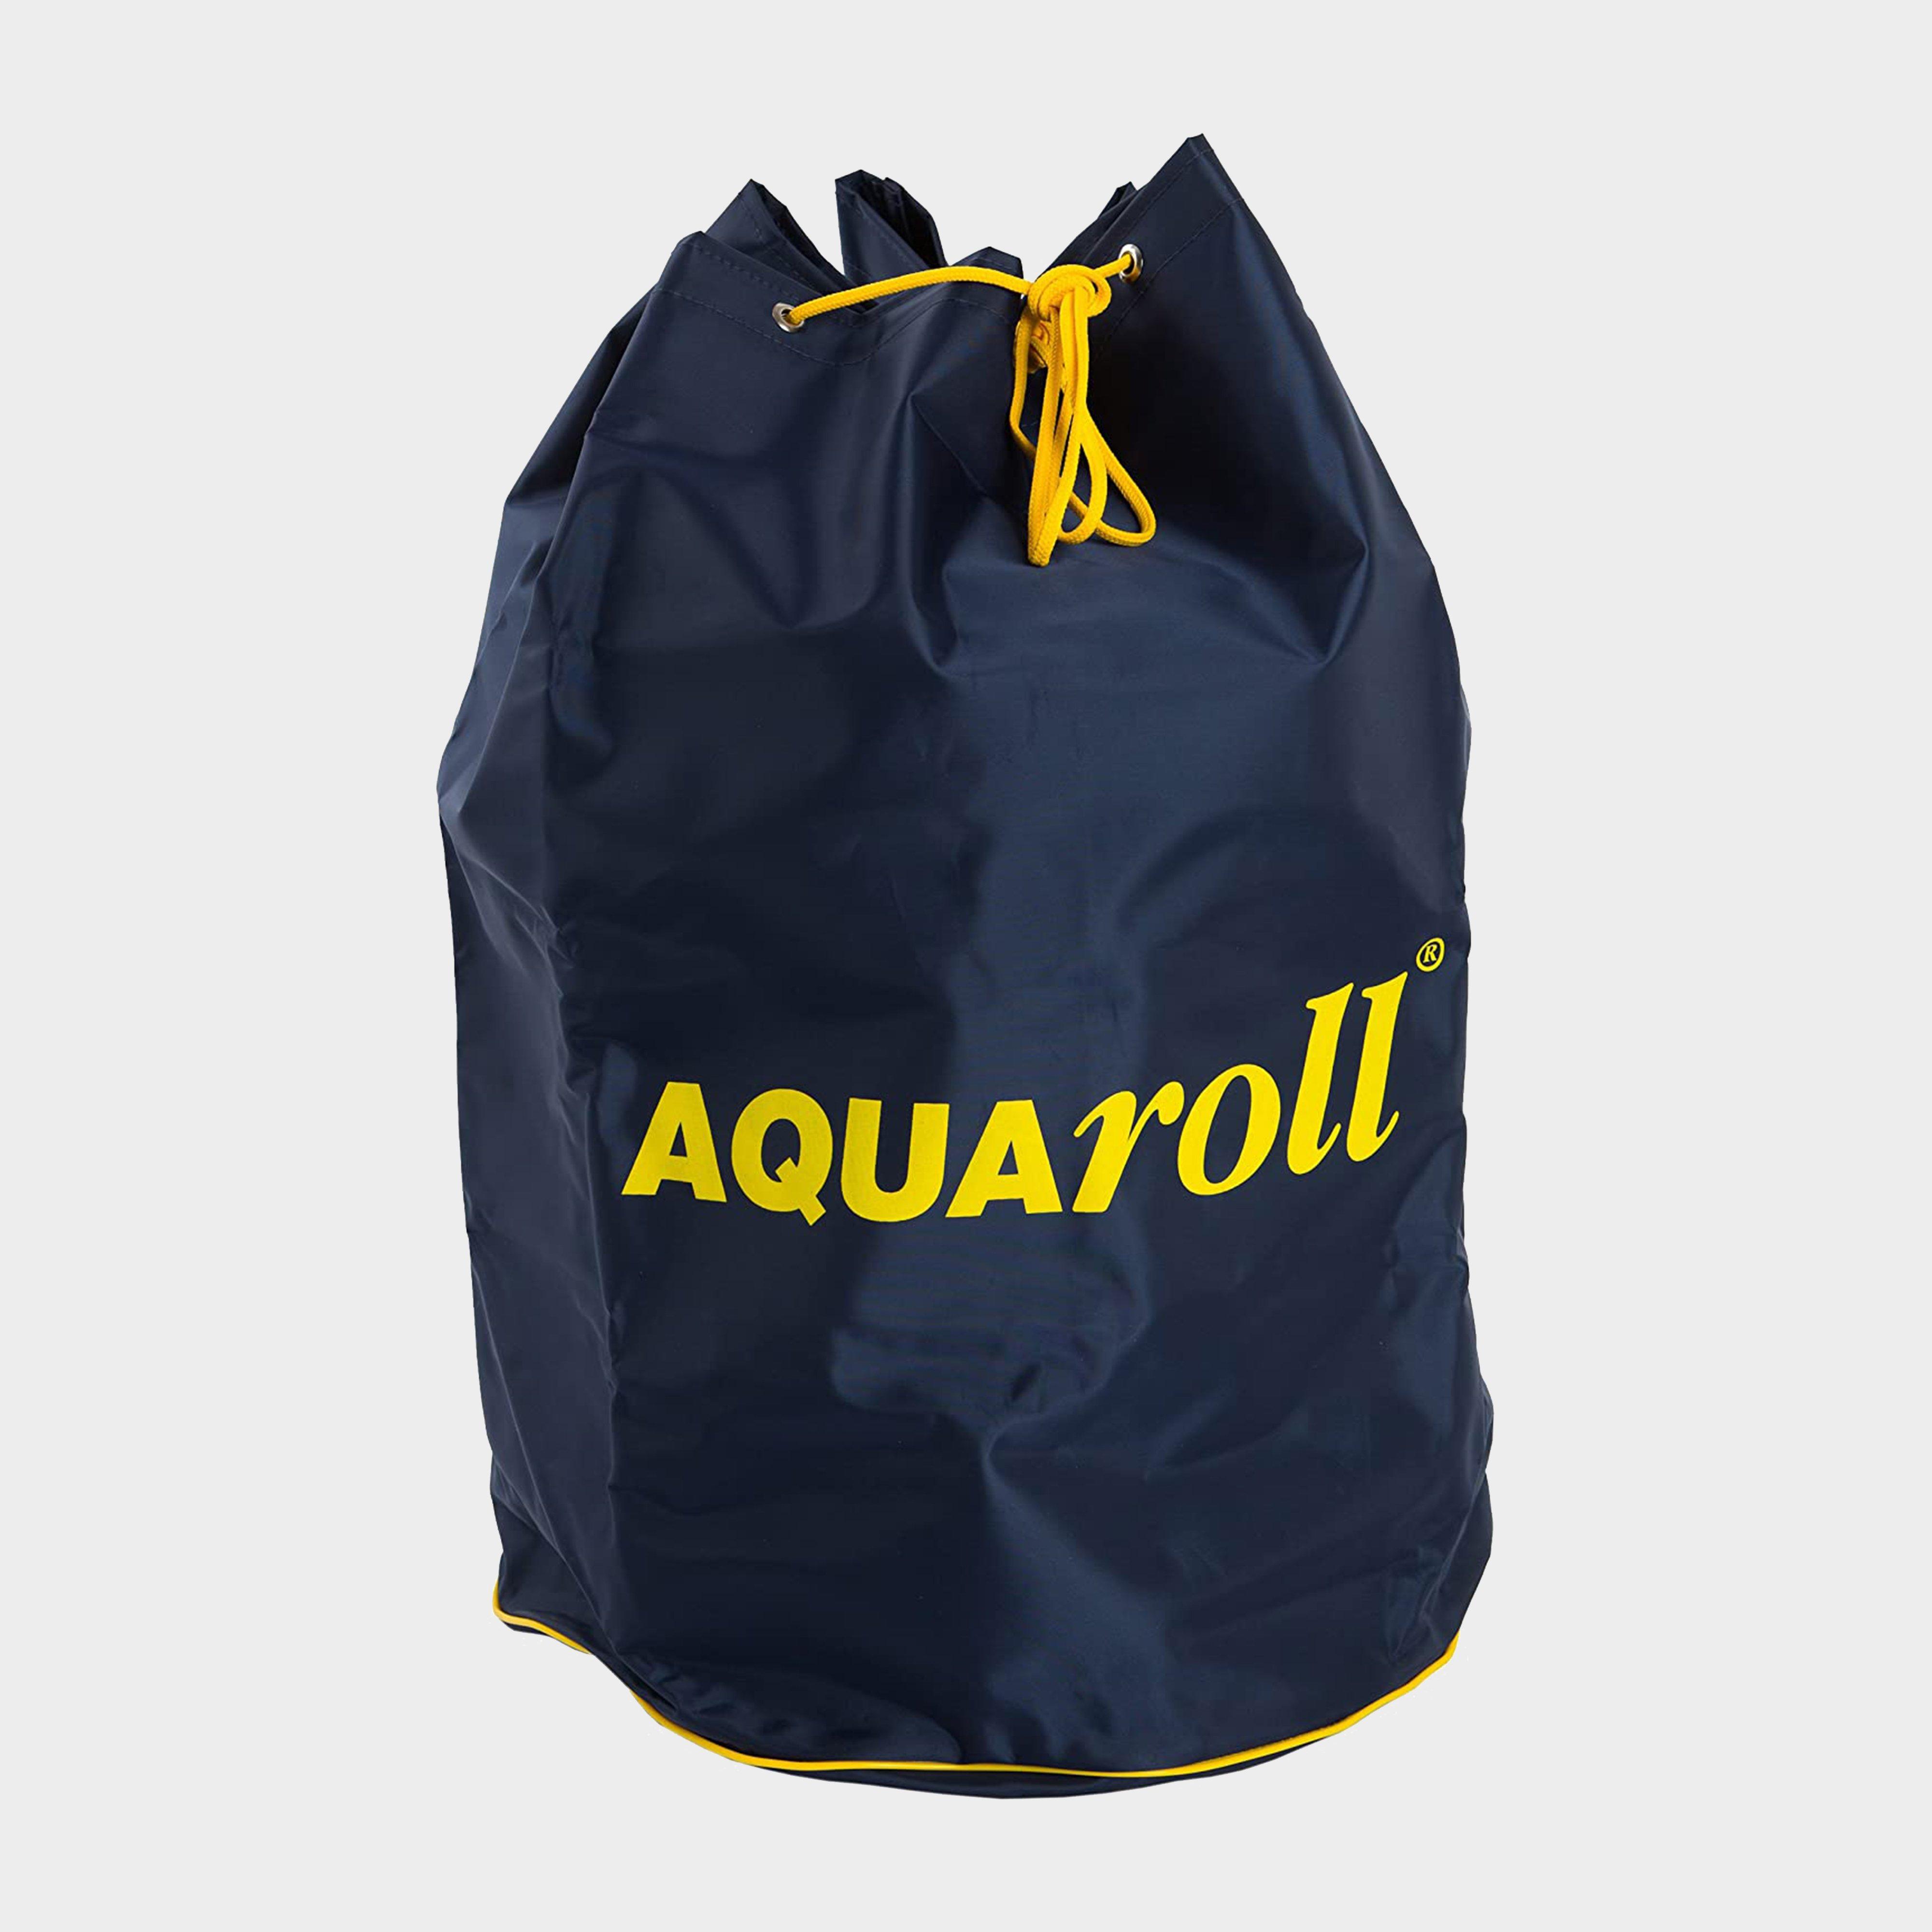 29L & 40L Aquaroll Bag - Black, Black